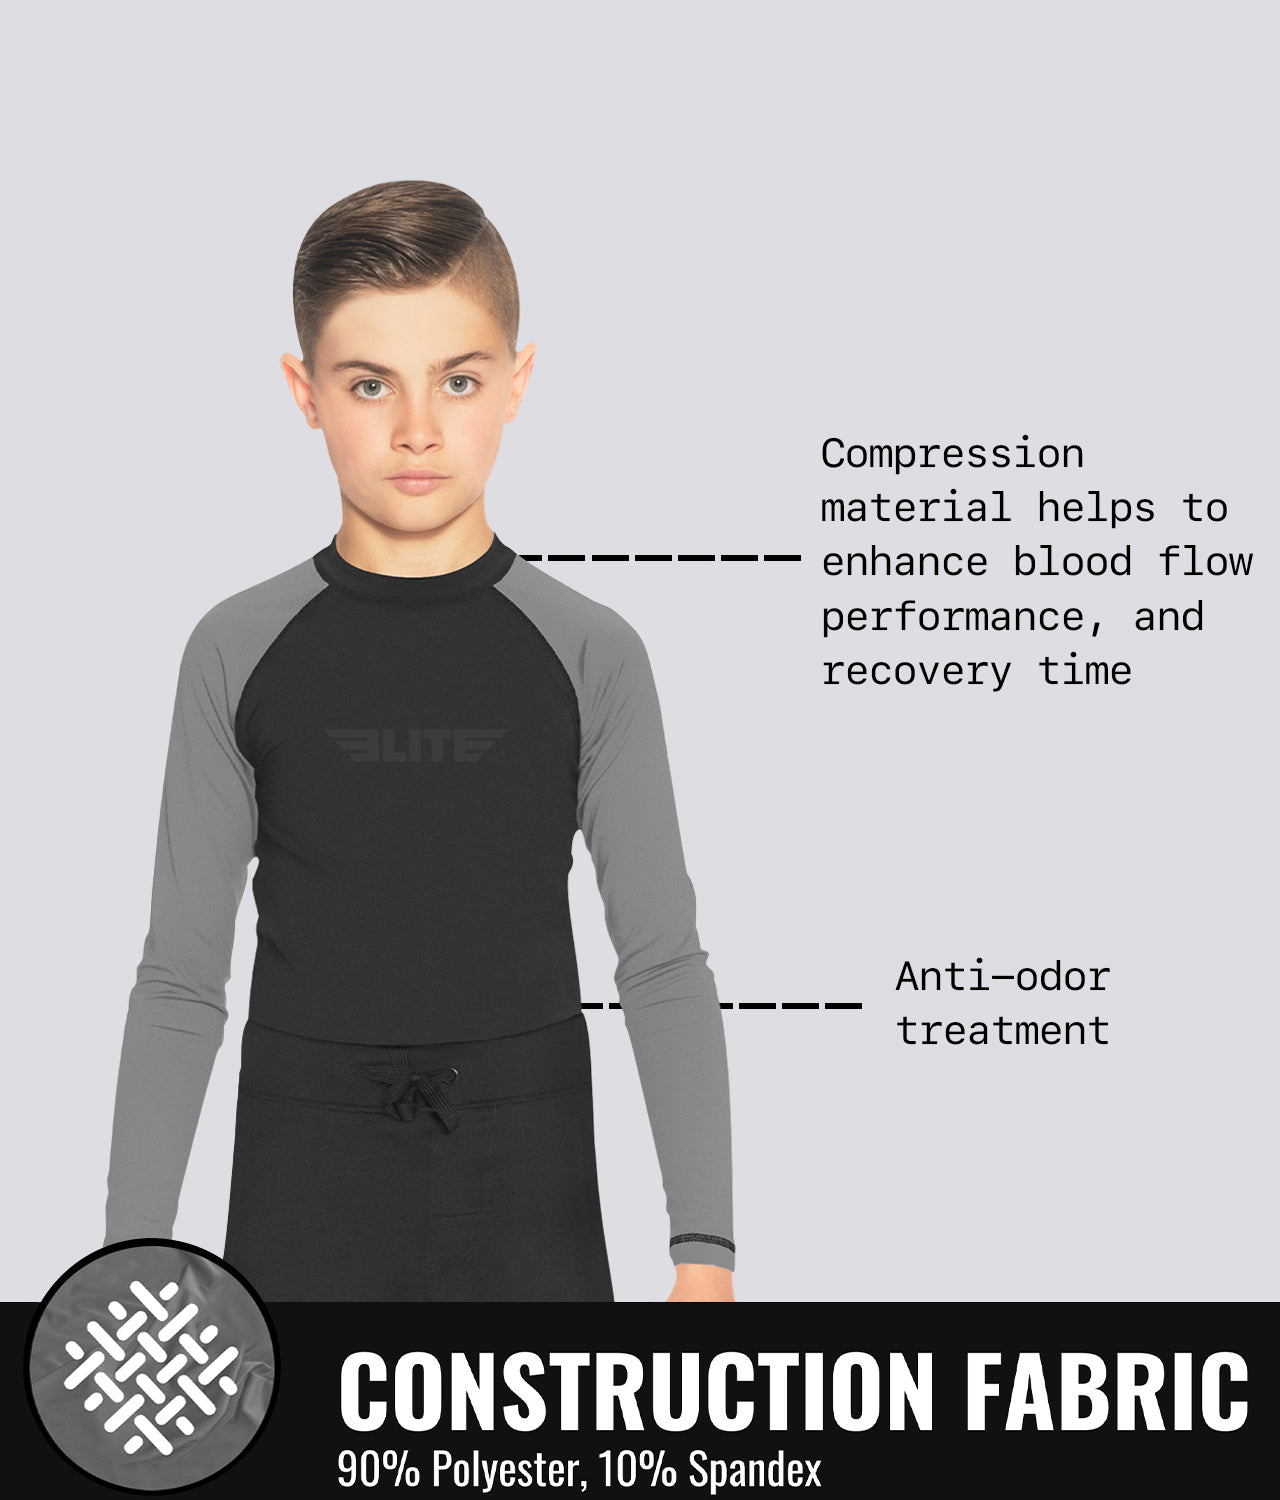 Elite Sports Kids' Standard Gray Long Sleeve BJJ Rash Guard